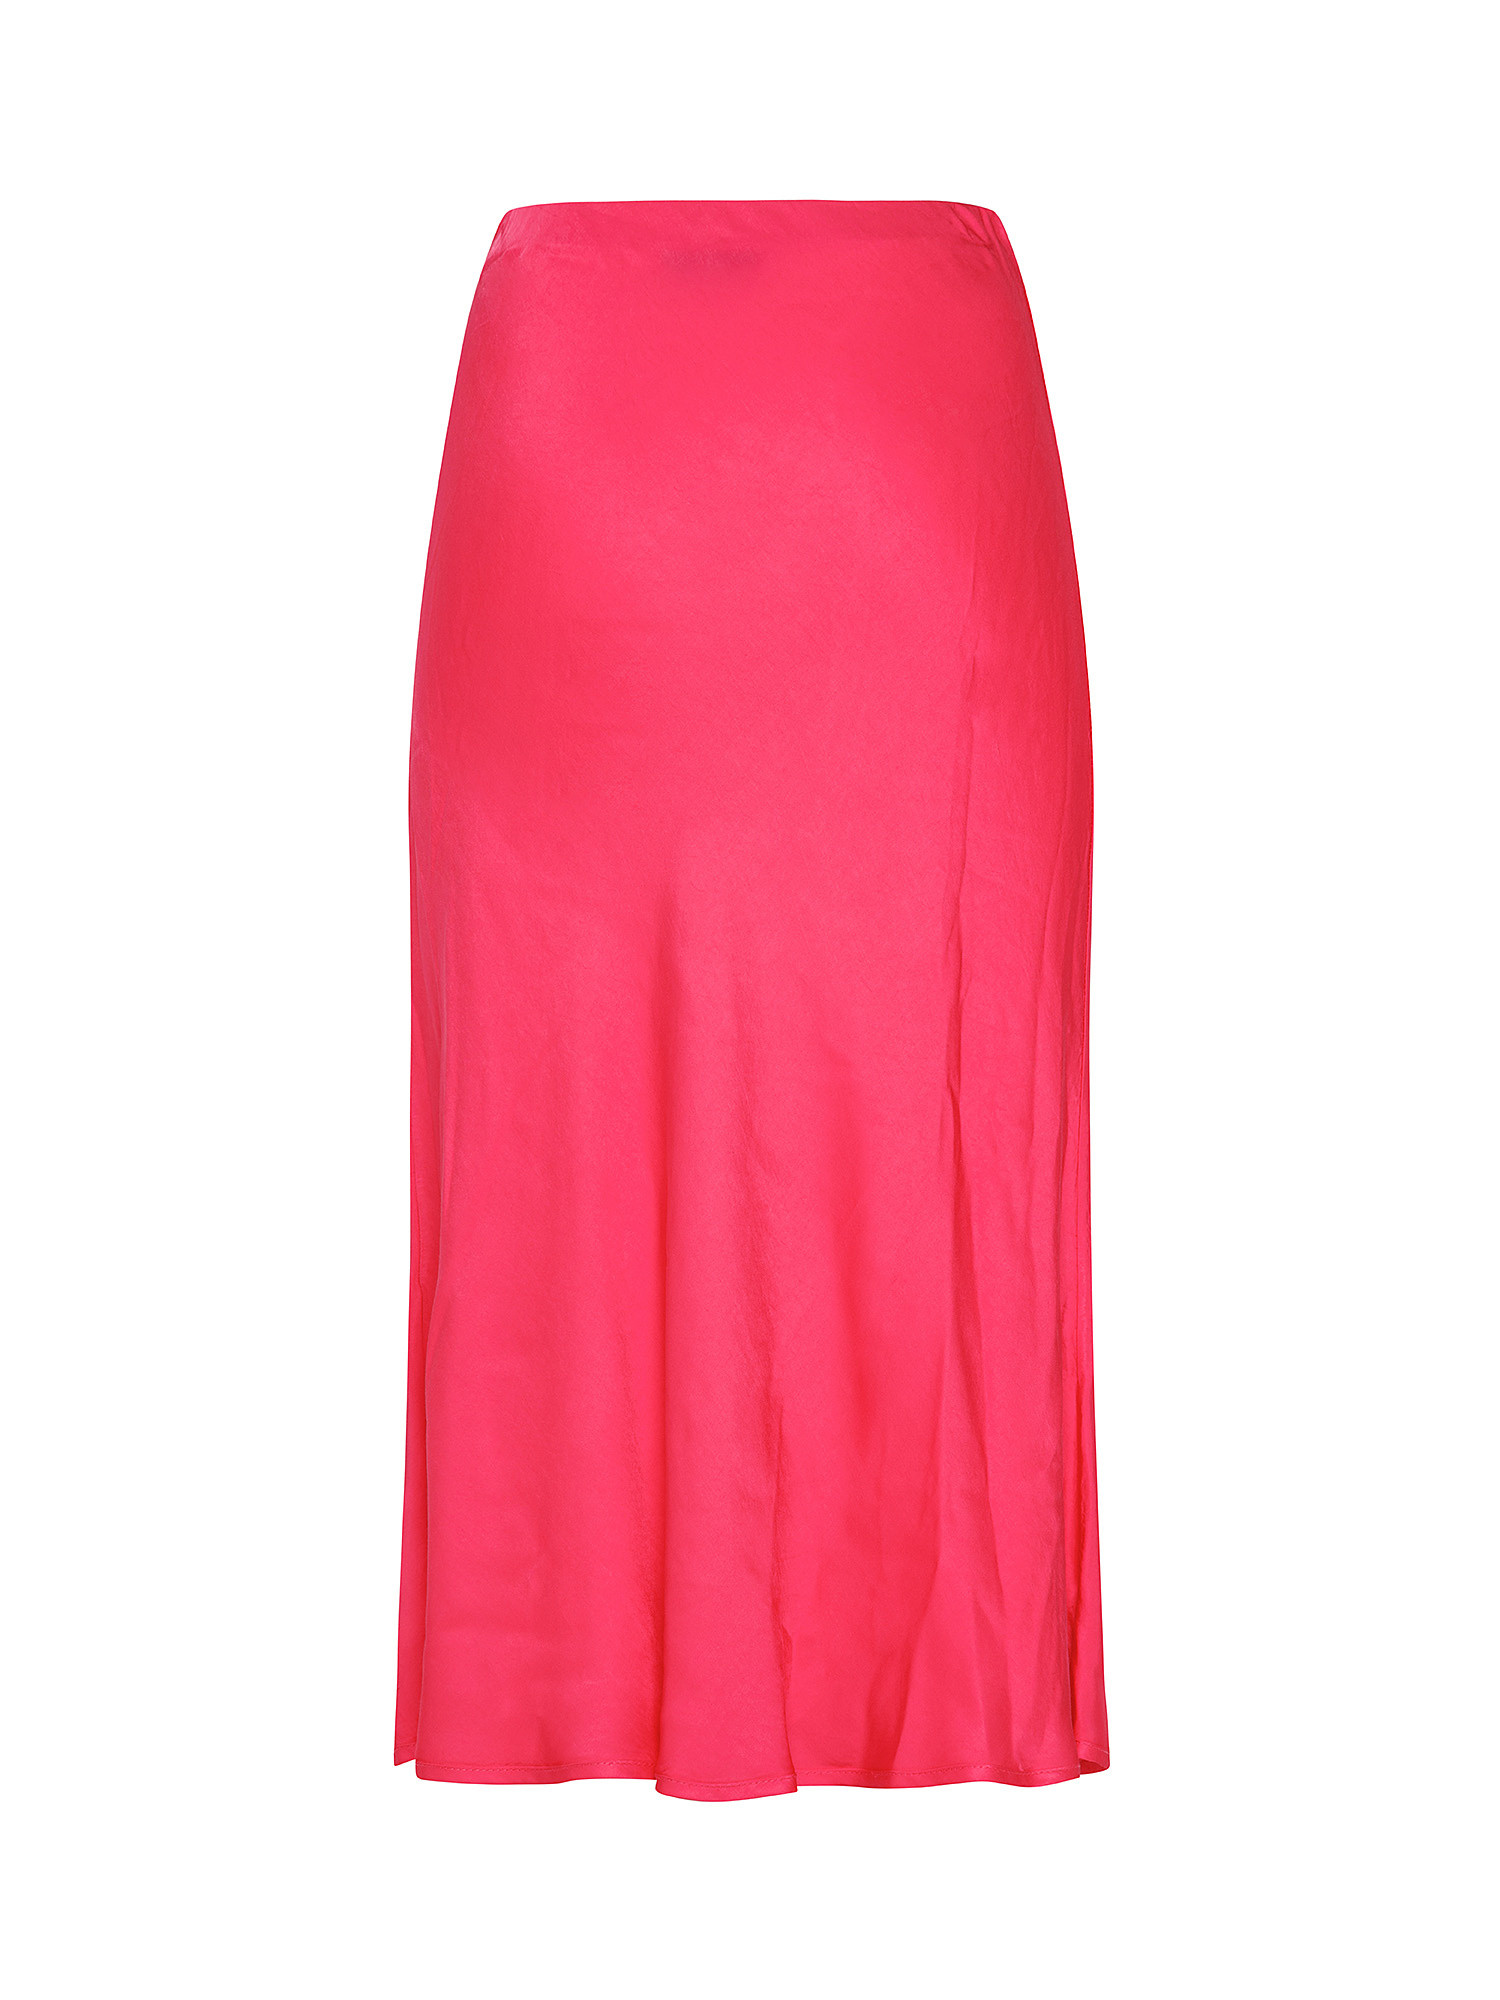 Viscose skirt, Pink Fuchsia, large image number 1